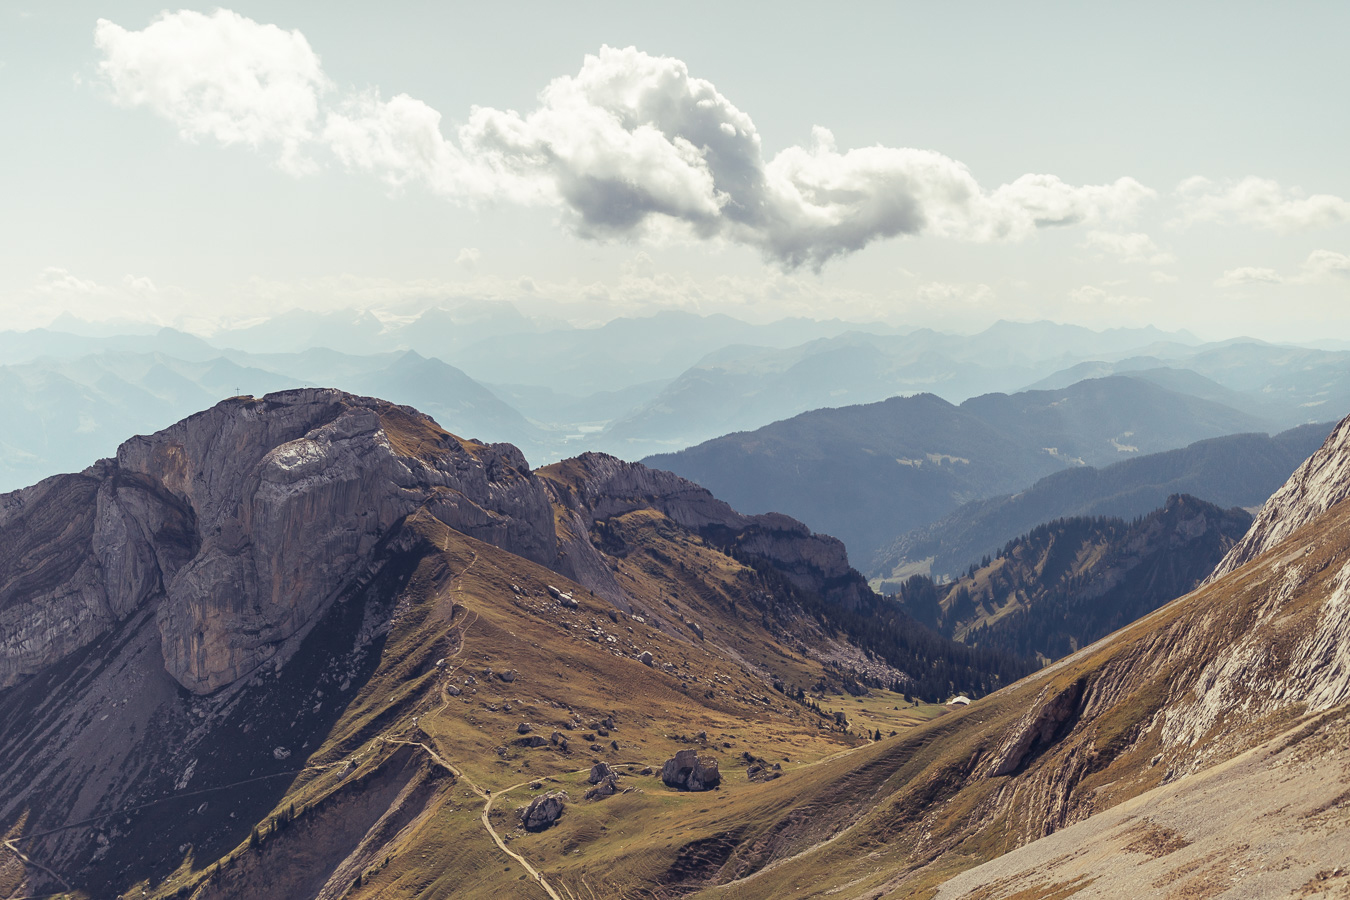 Photograph of Mount Pilatus, Switzerland by Alex Nichol